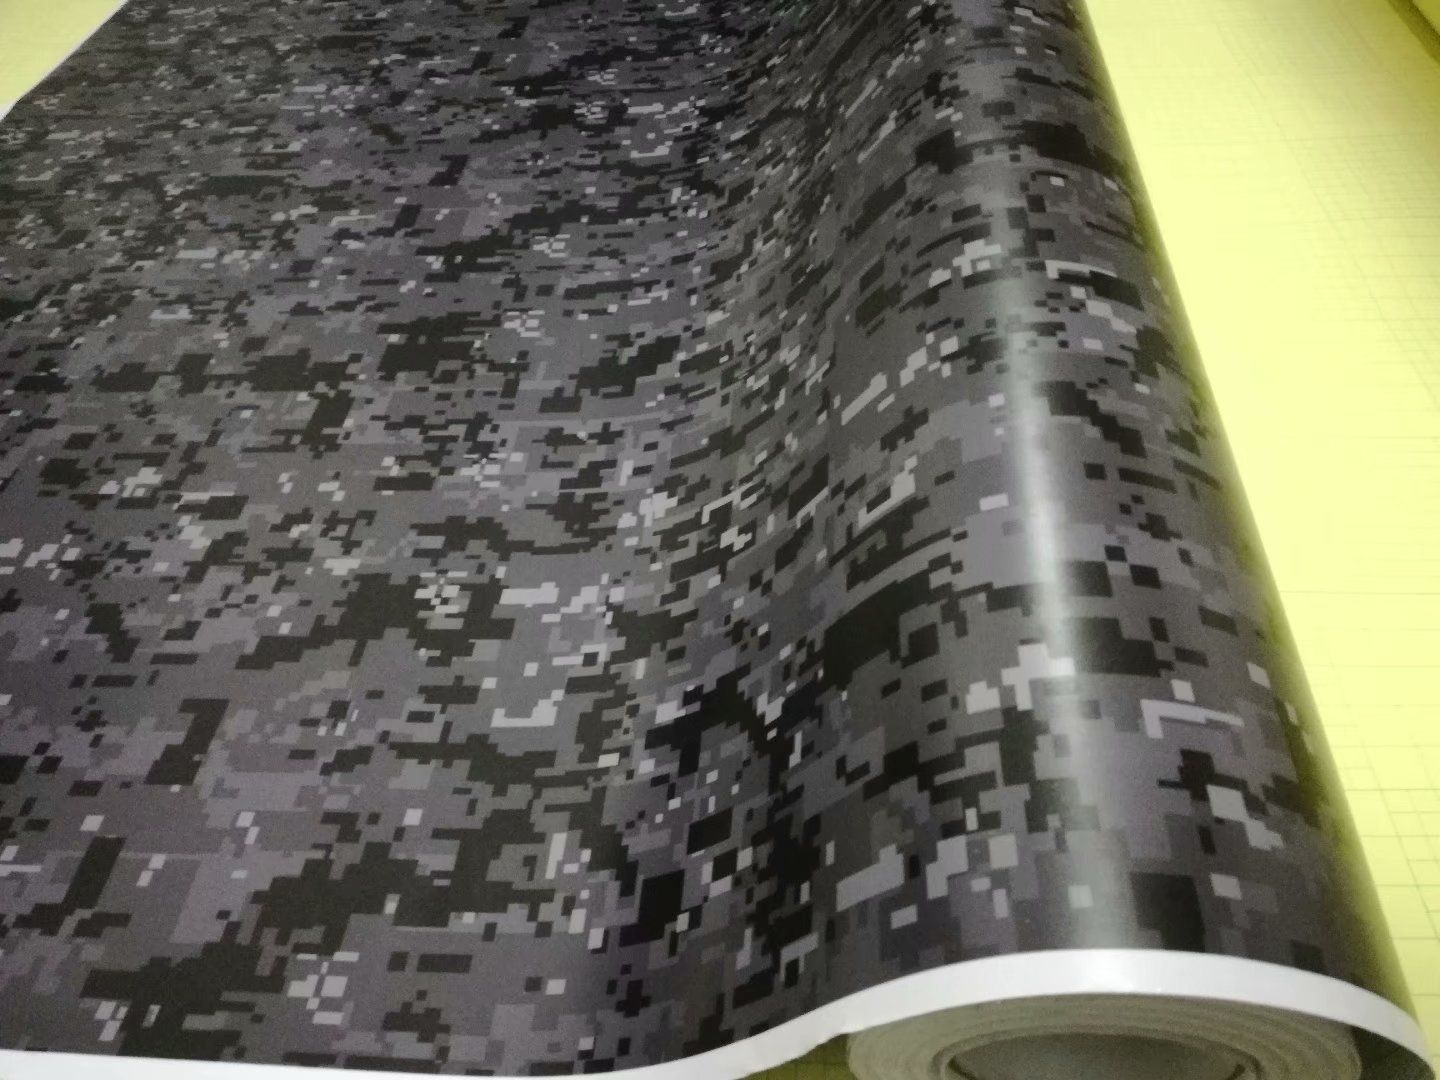 2021 Premium Black Dark Grey Urban Night Digital Camo Vinyl Car Wrap With Air Bubble Free Pixel